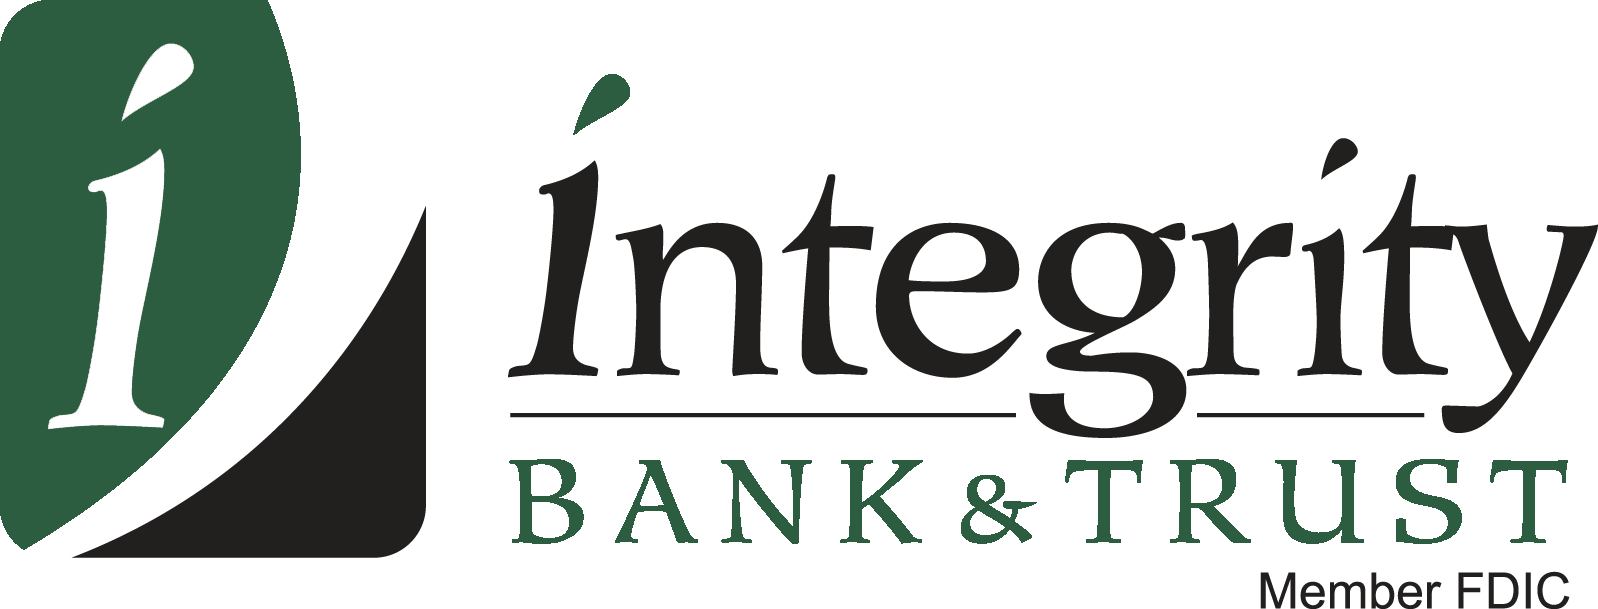 Integrity Bank & Trust Logo